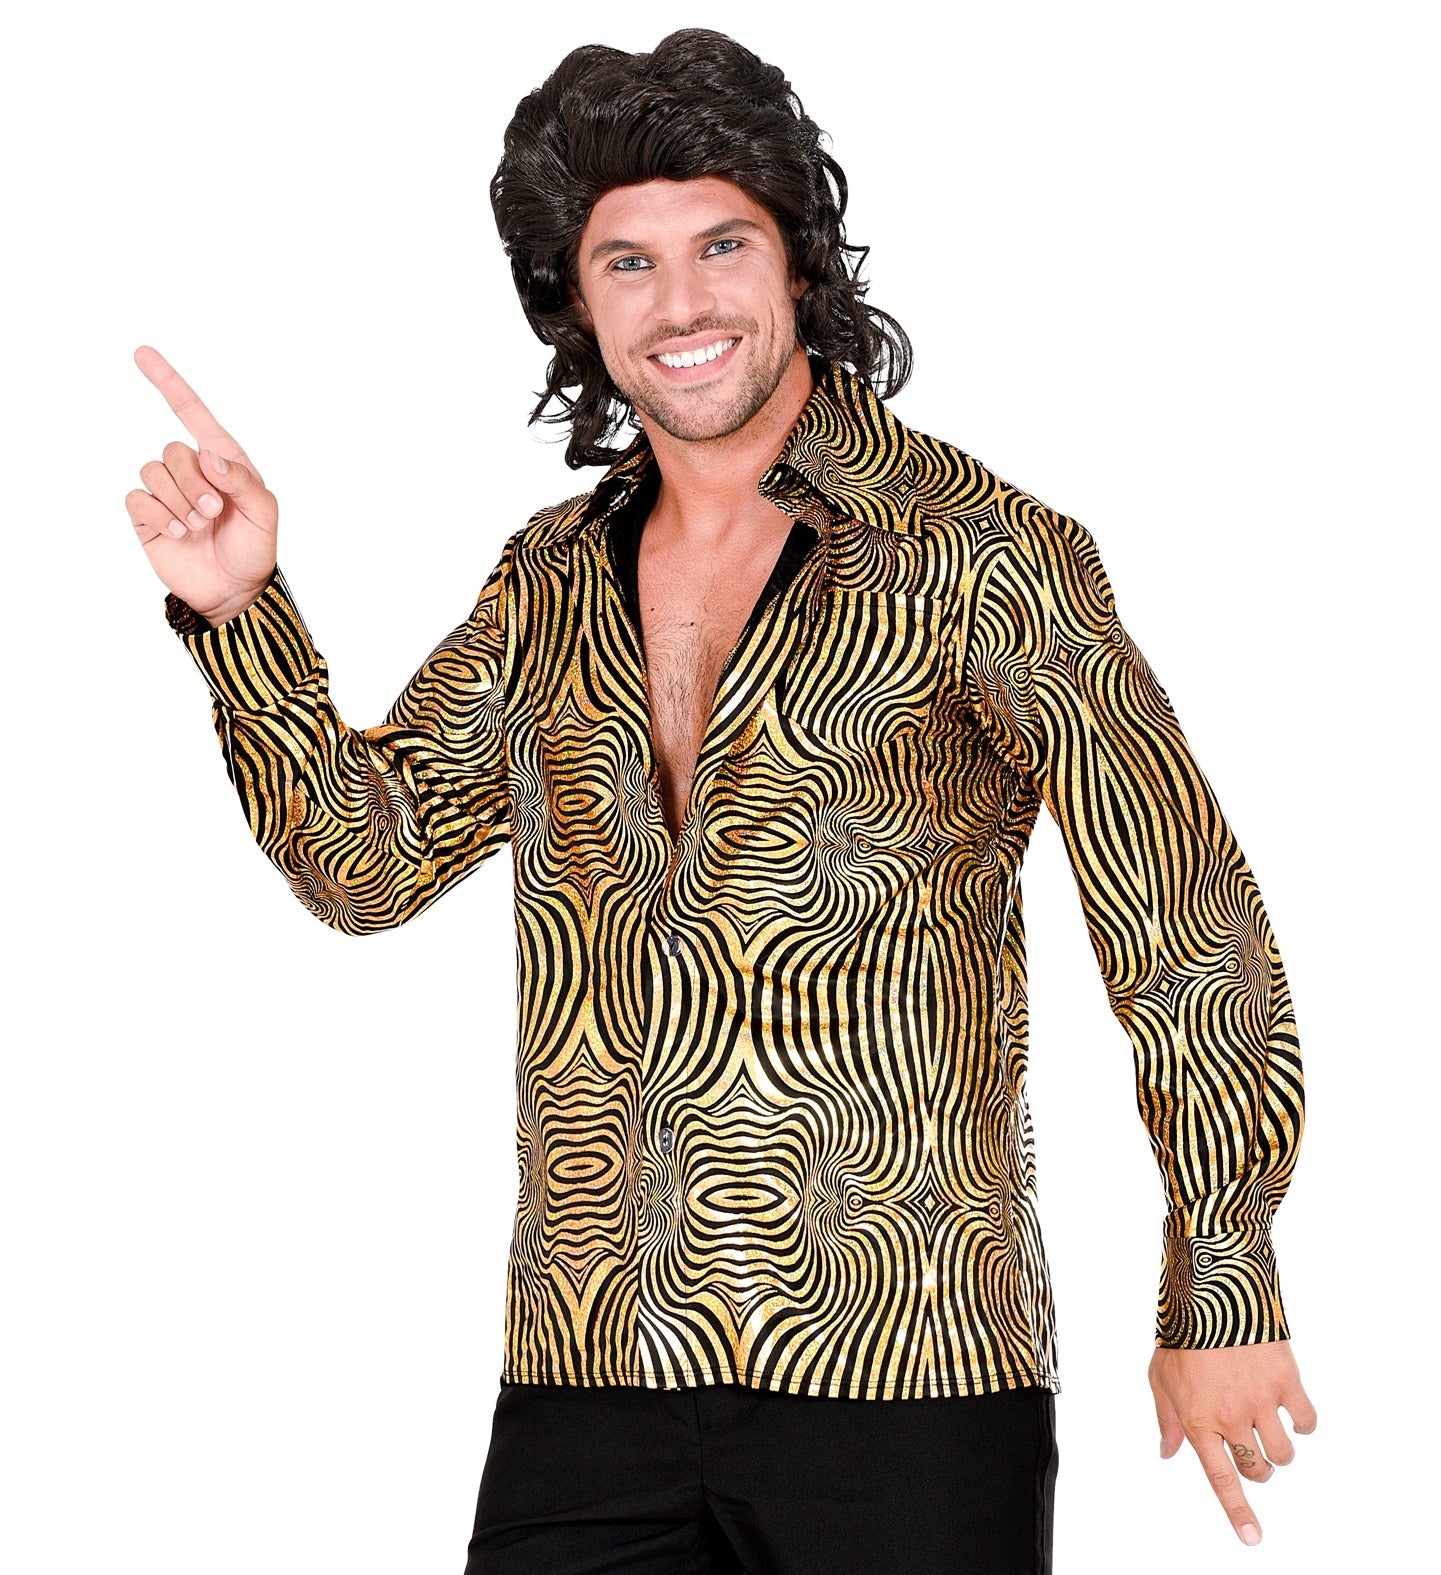 Widmann - Jaren 80 & 90 Kostuum - 70s Gouden Exotische Joe Disco Man - goud - XXL - Carnavalskleding - Verkleedkleding